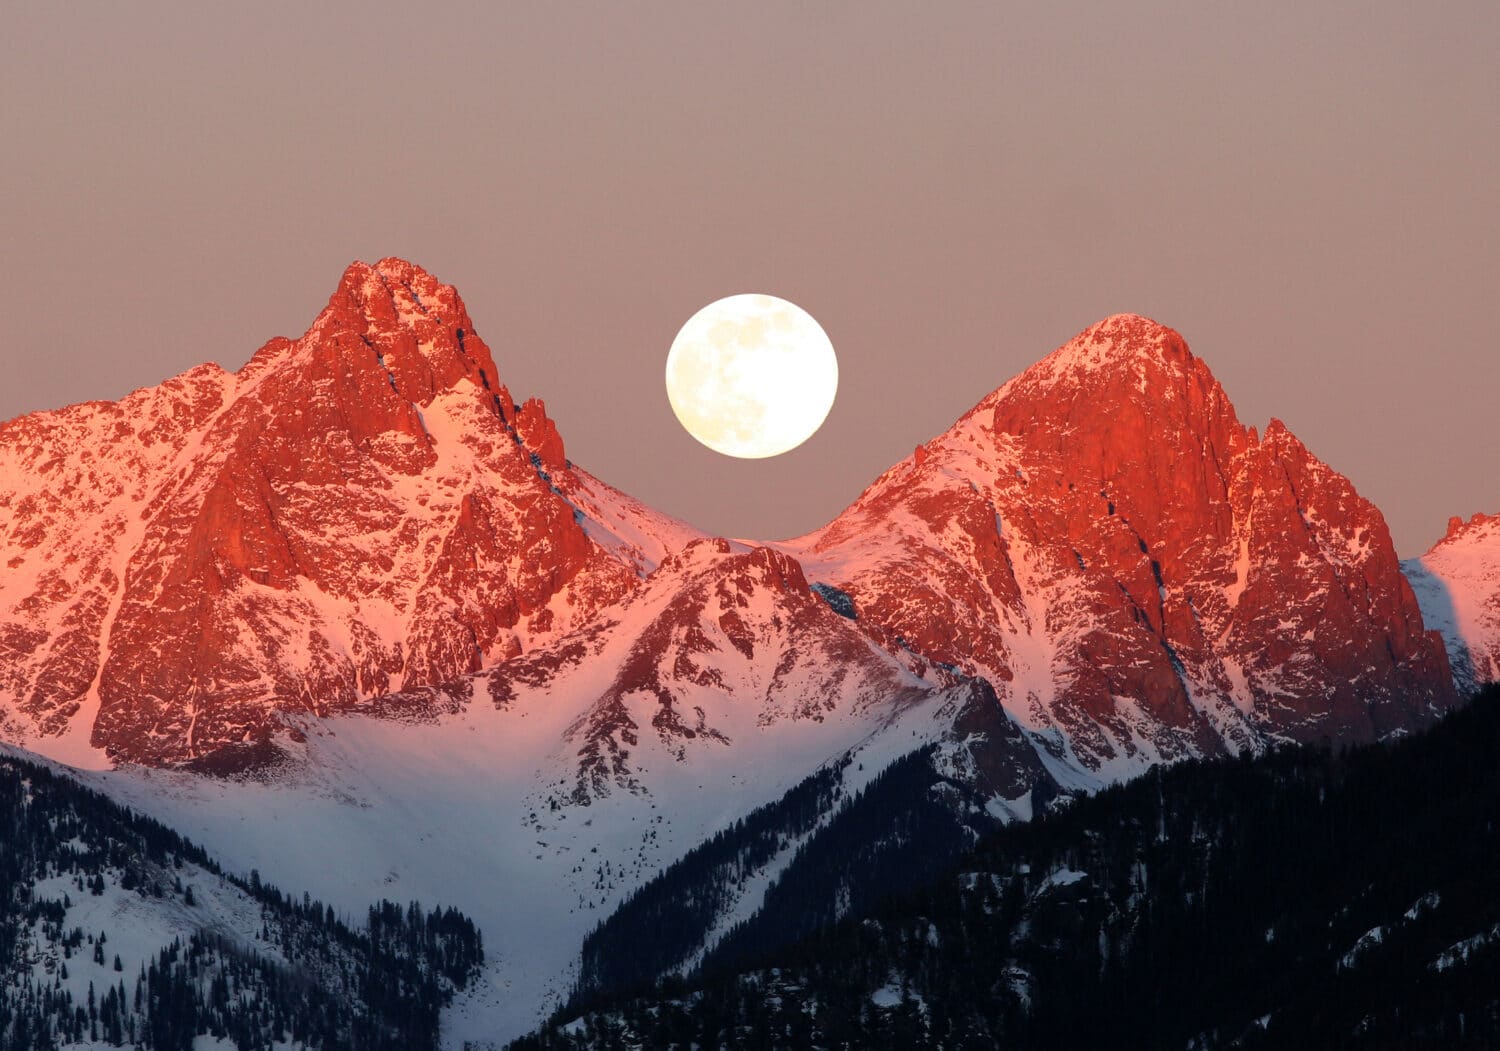 A full moon rises between two peaks